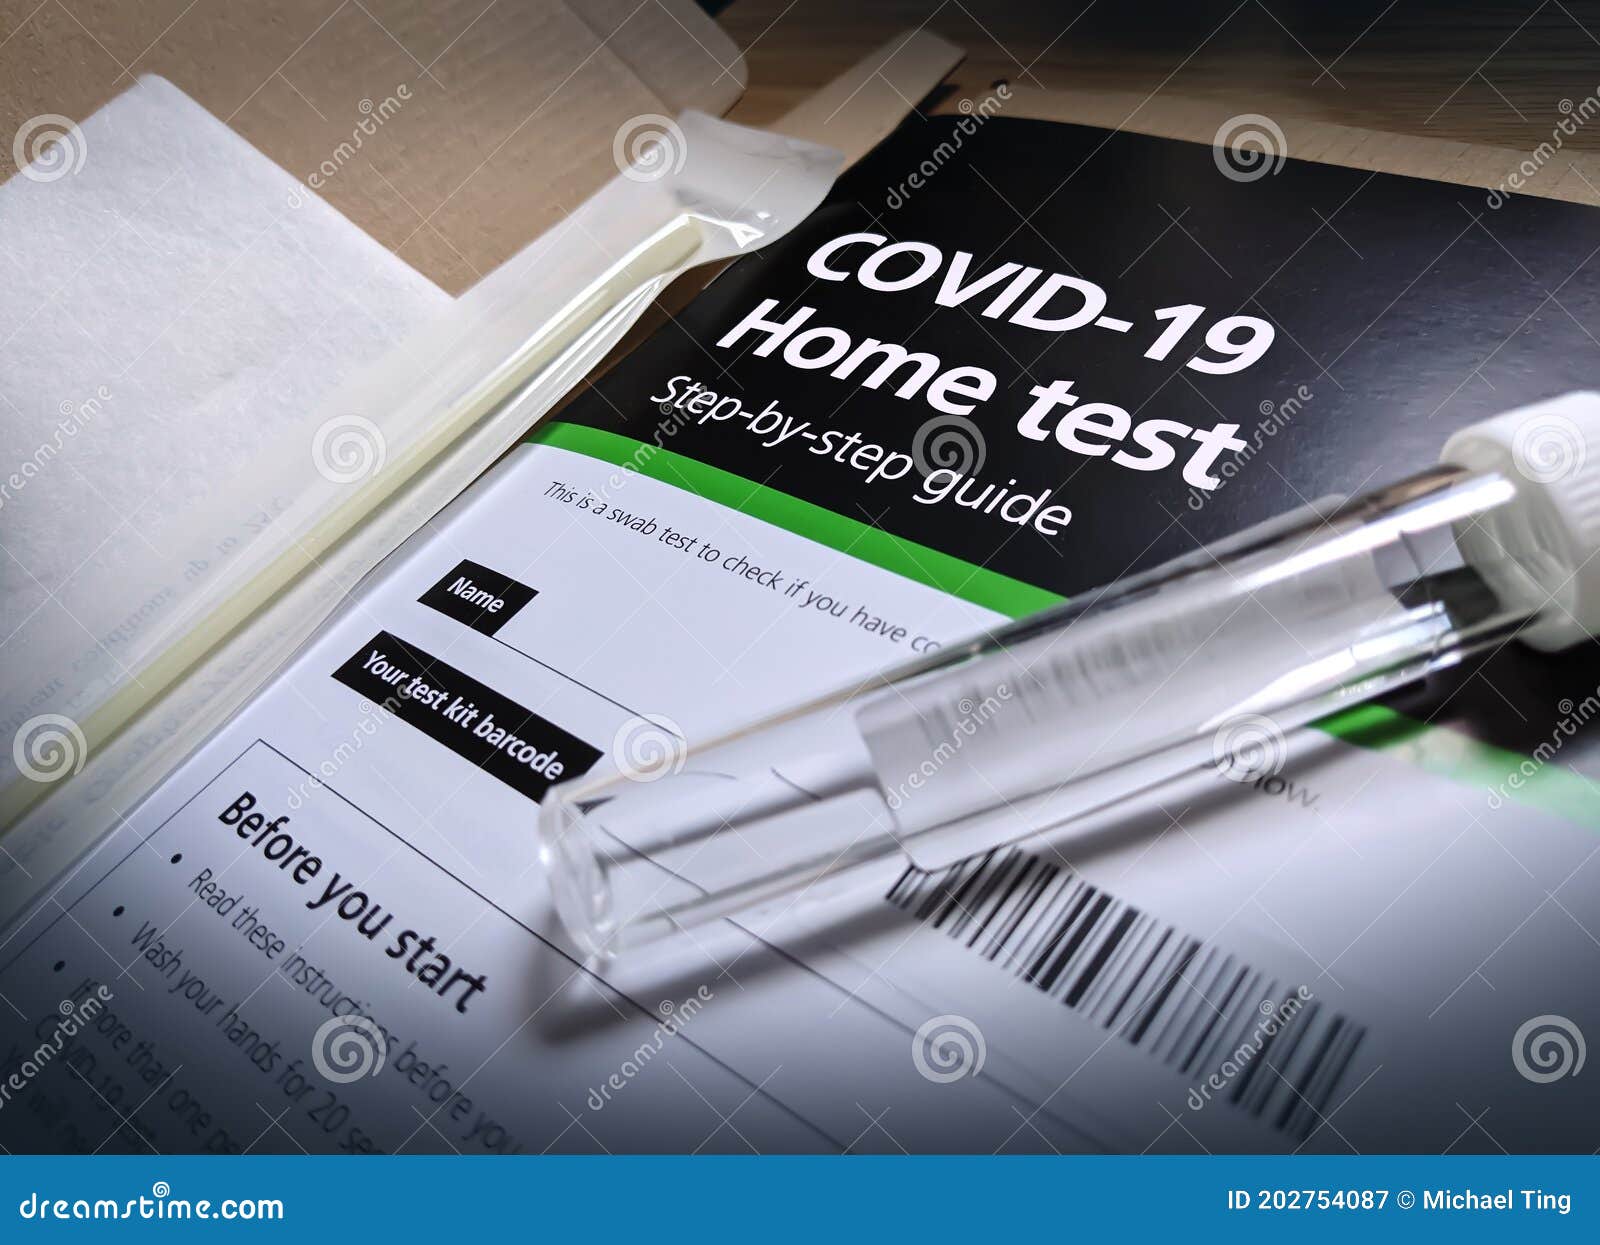 covid 19 coronavirus home test with vial sample from uk health